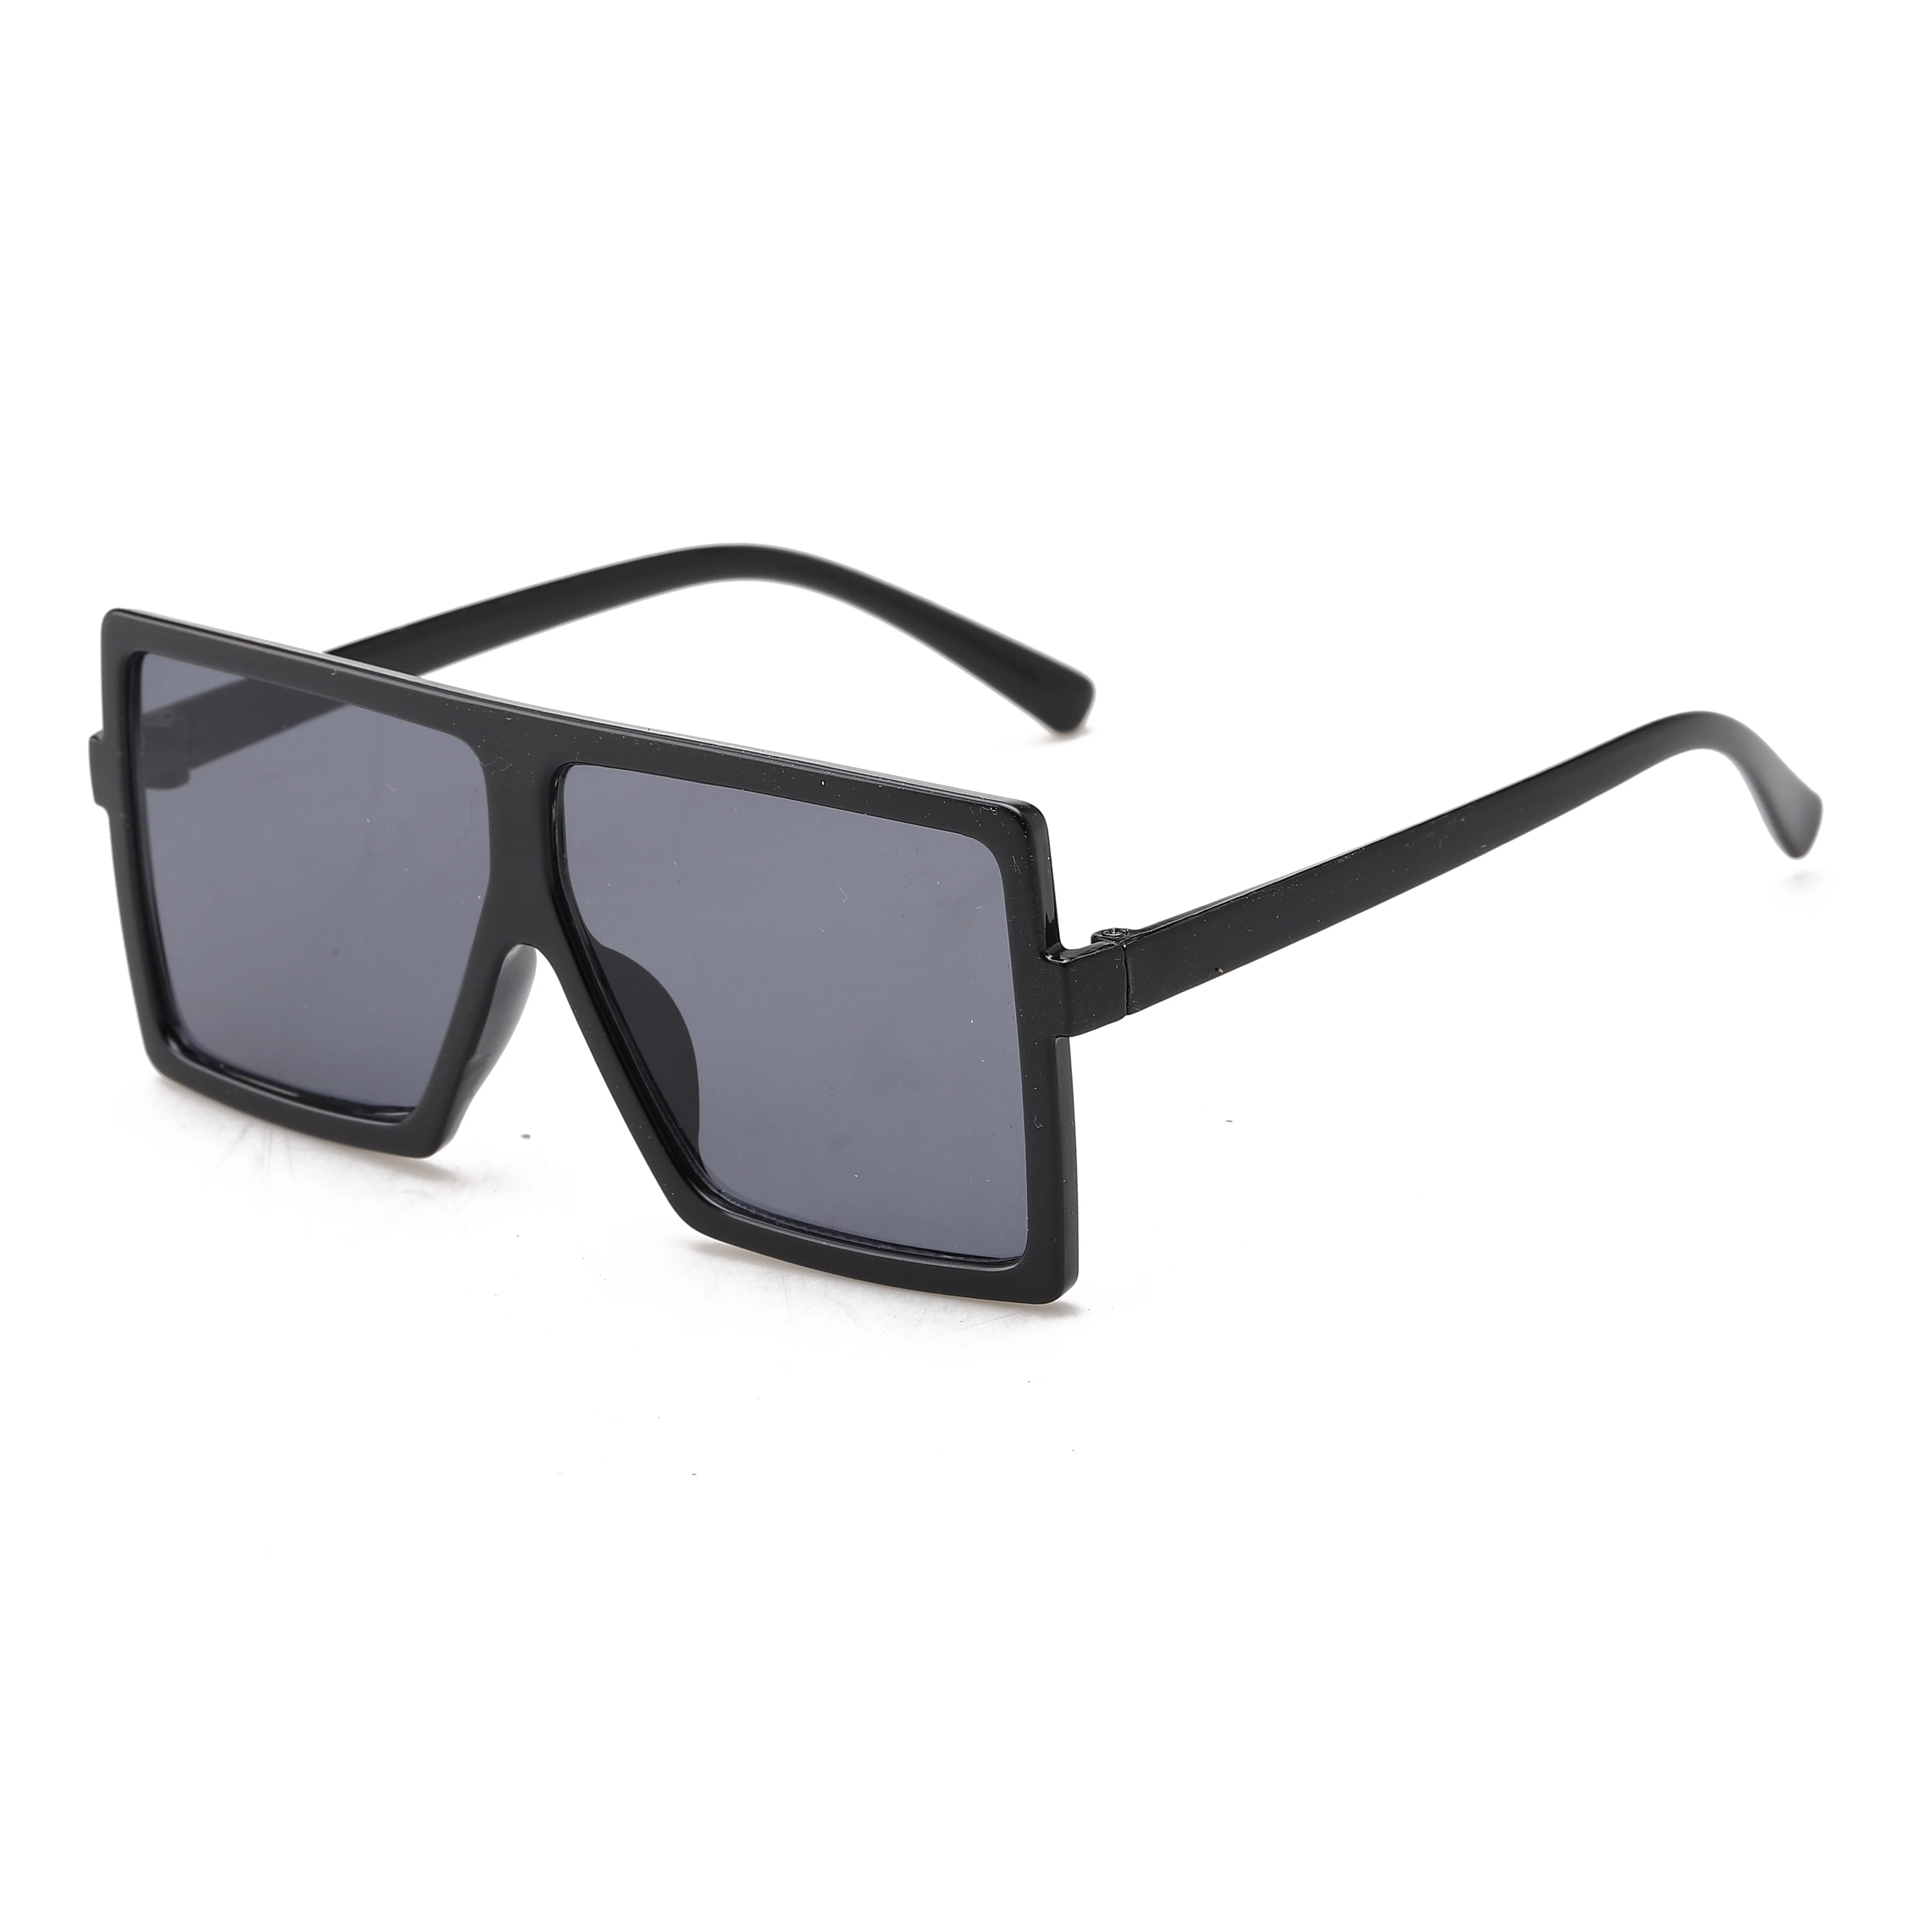 

RENNES Hot Selling Fashion PC+Metal Material kids sunglasses wholesale Square Frame Sunglasses, Choose